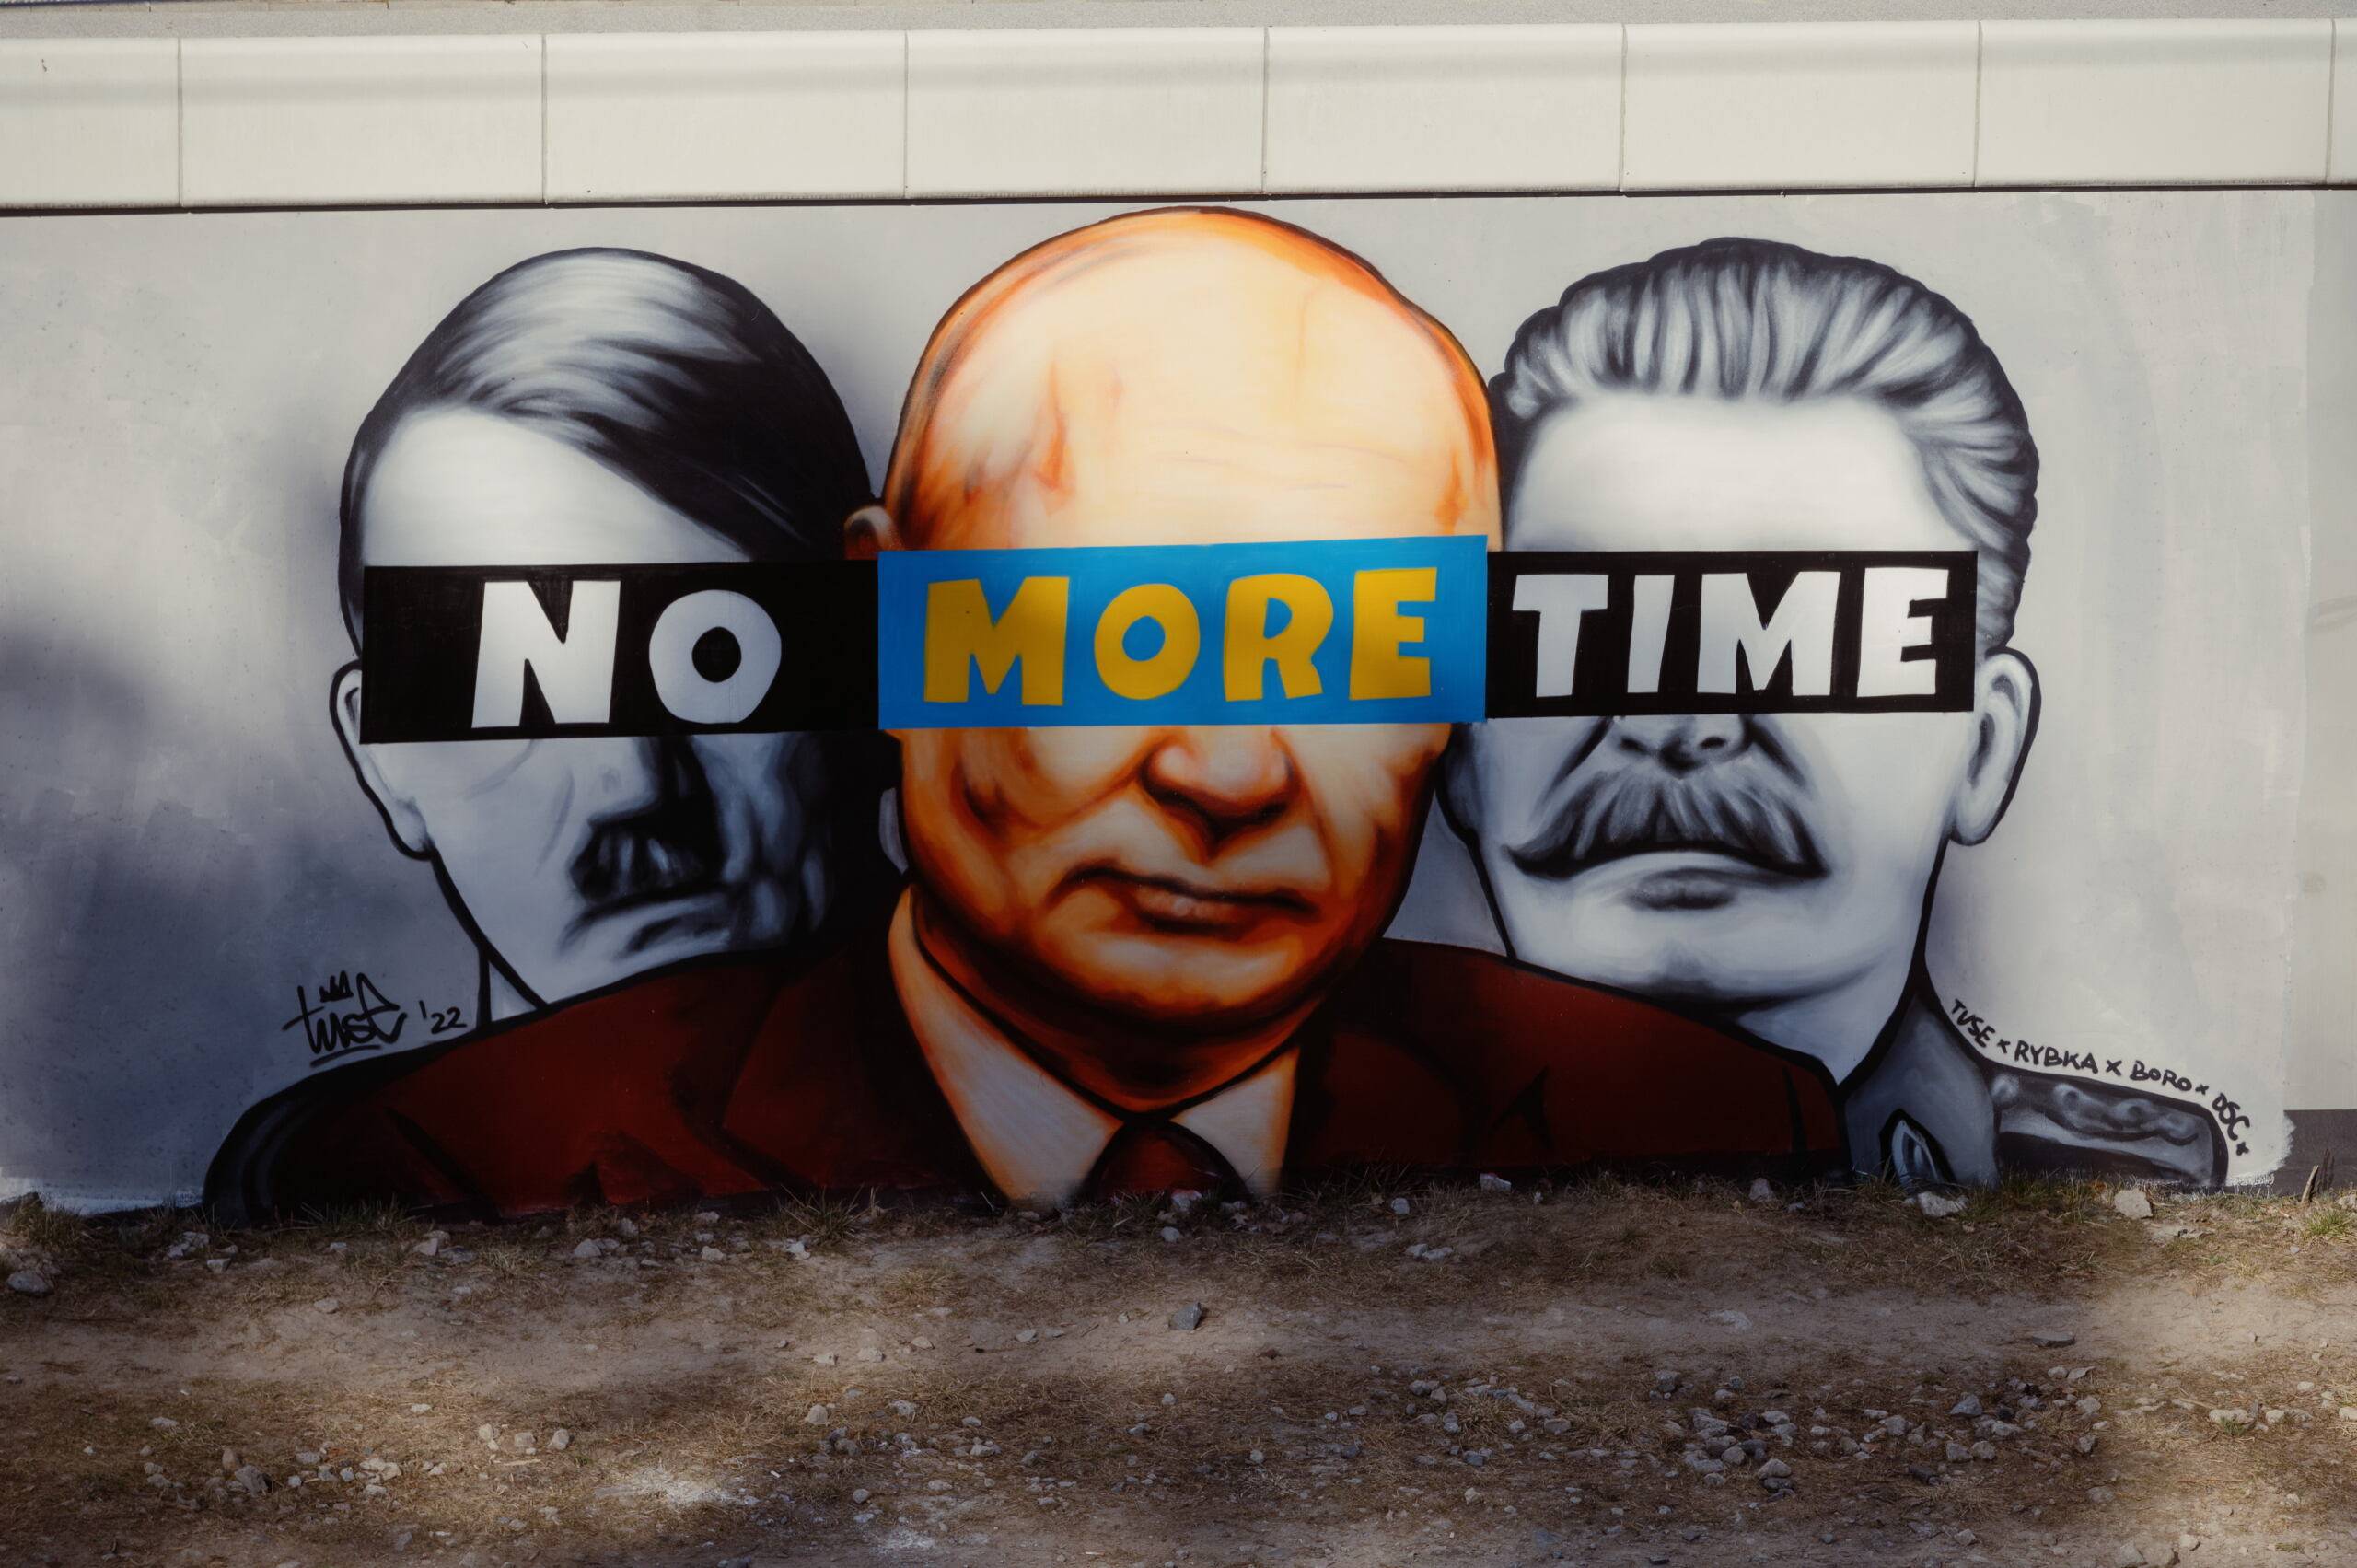 Mural - Putin po środku, z lewej Hitler, z prawej Stalin